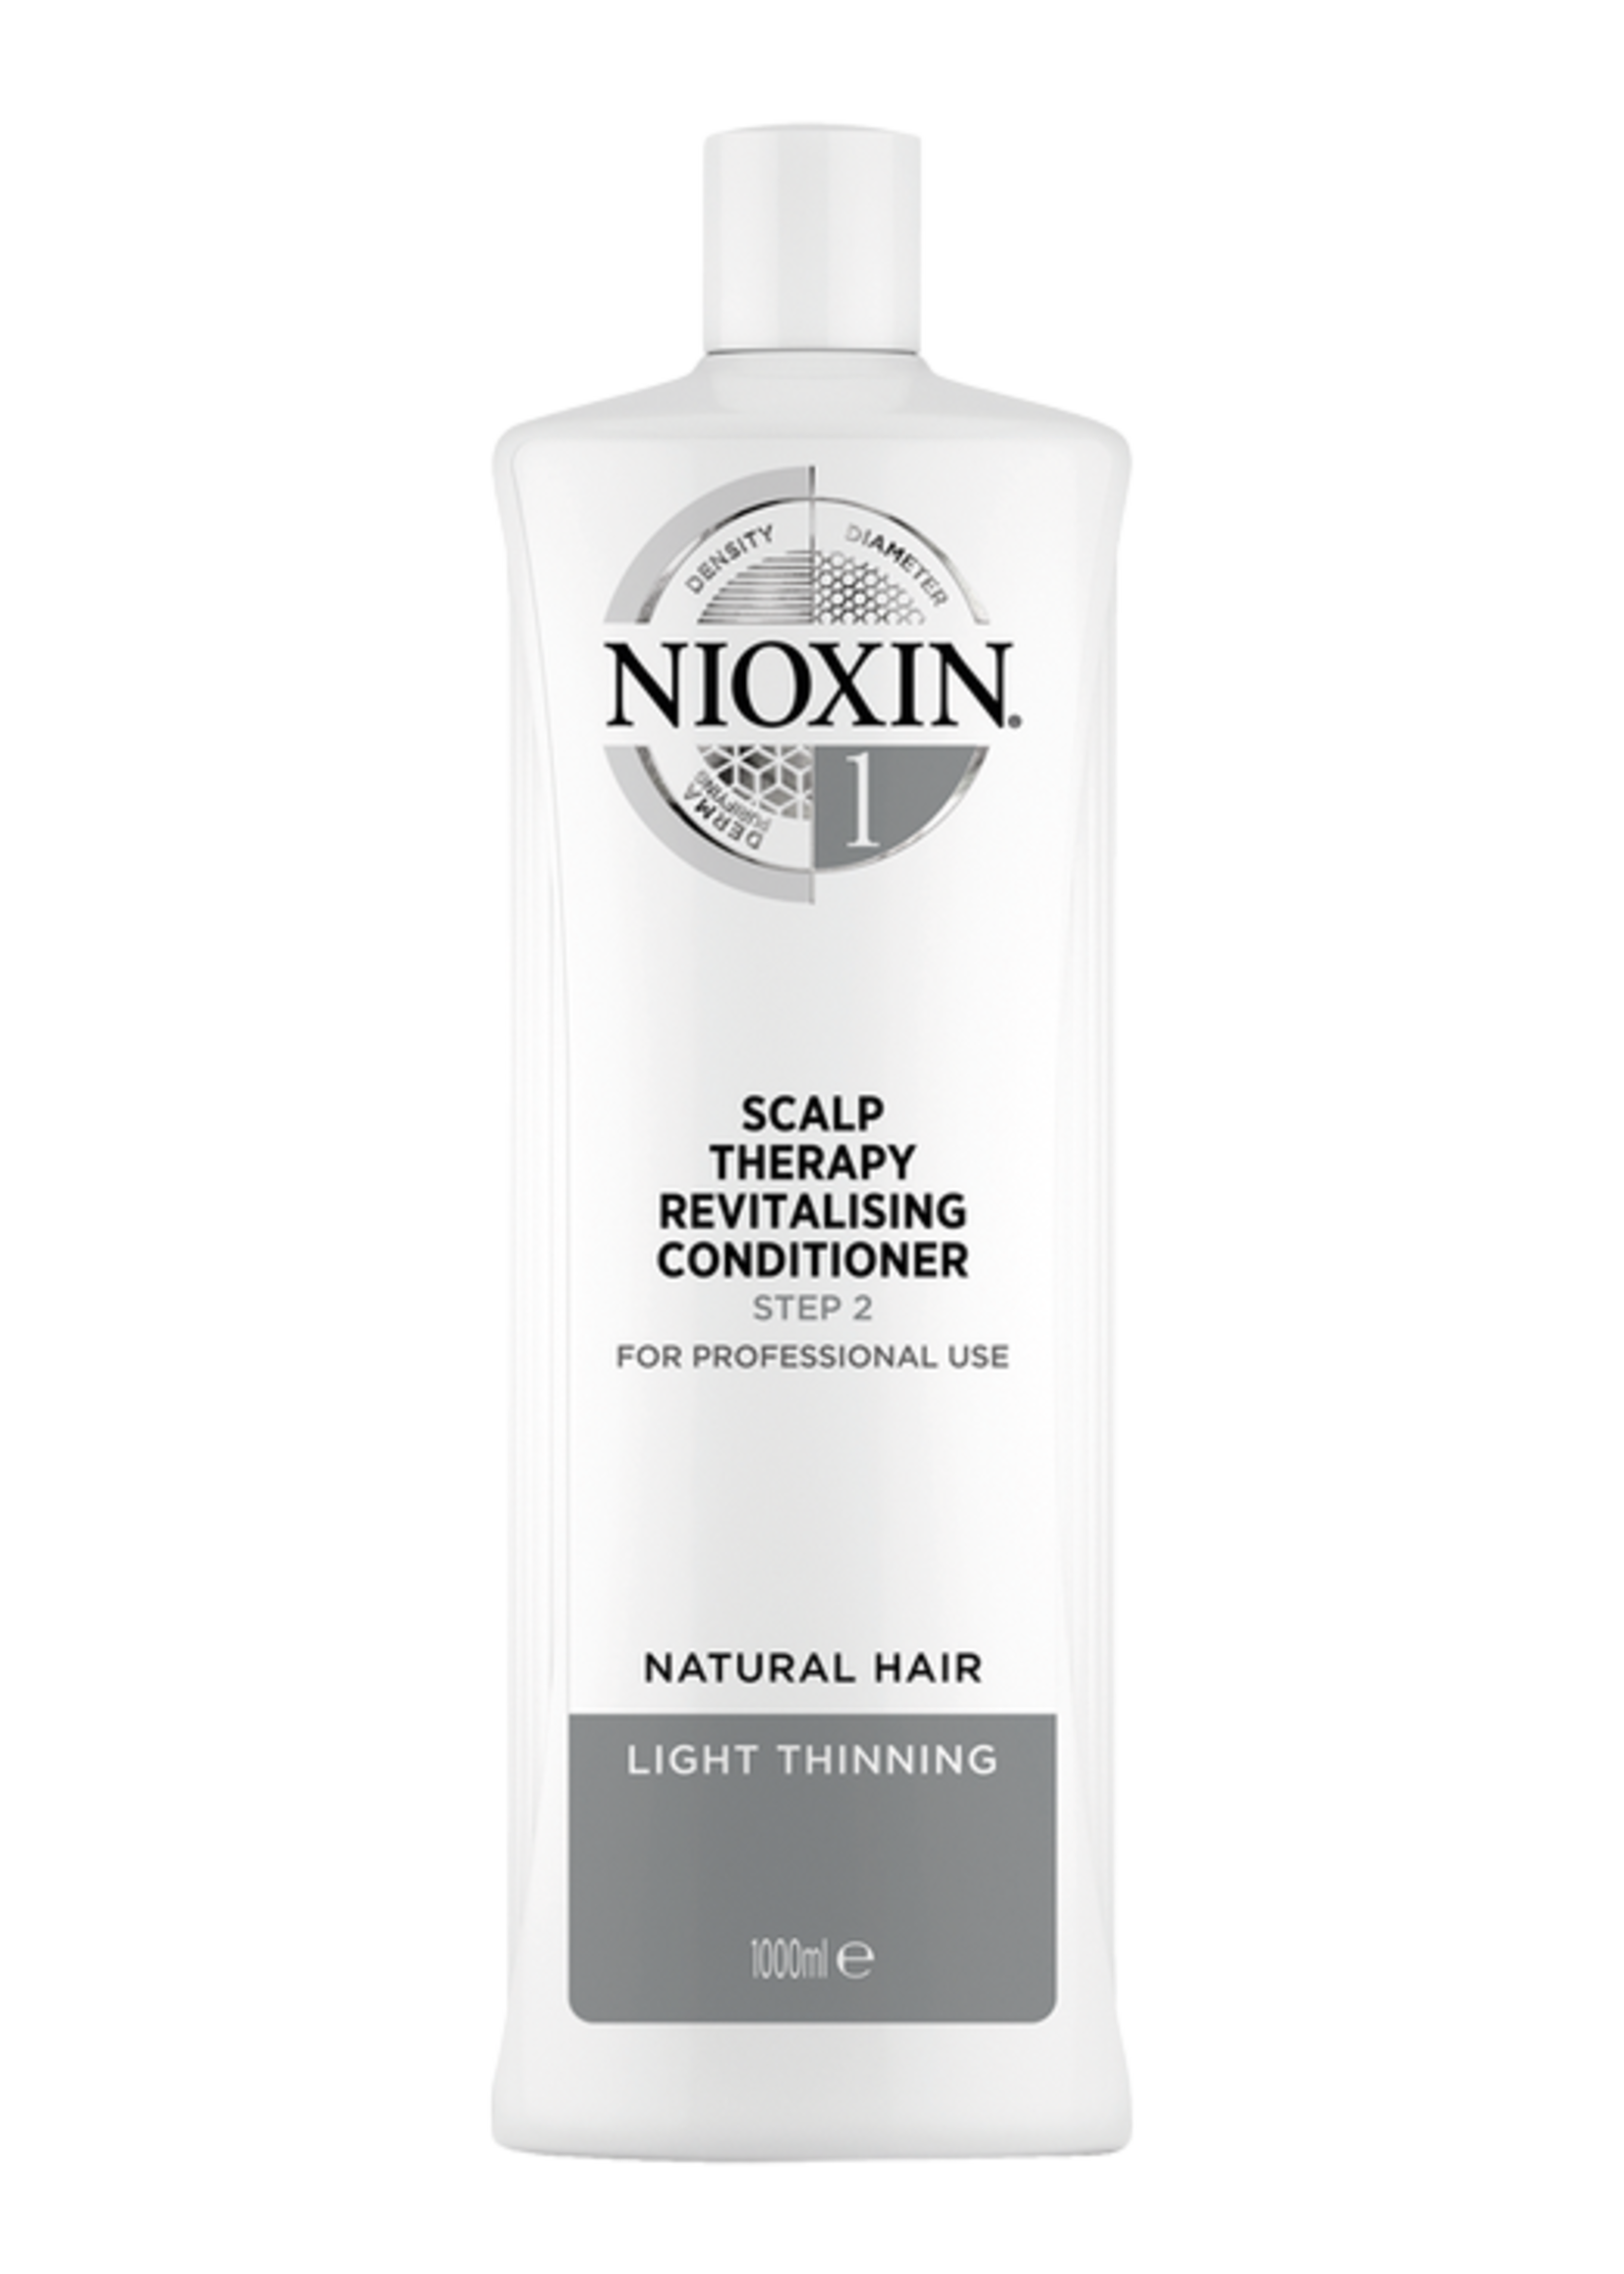 Nioxin Nioxin System 1 Scalp Therapy Revitalizing Conditioner 1L